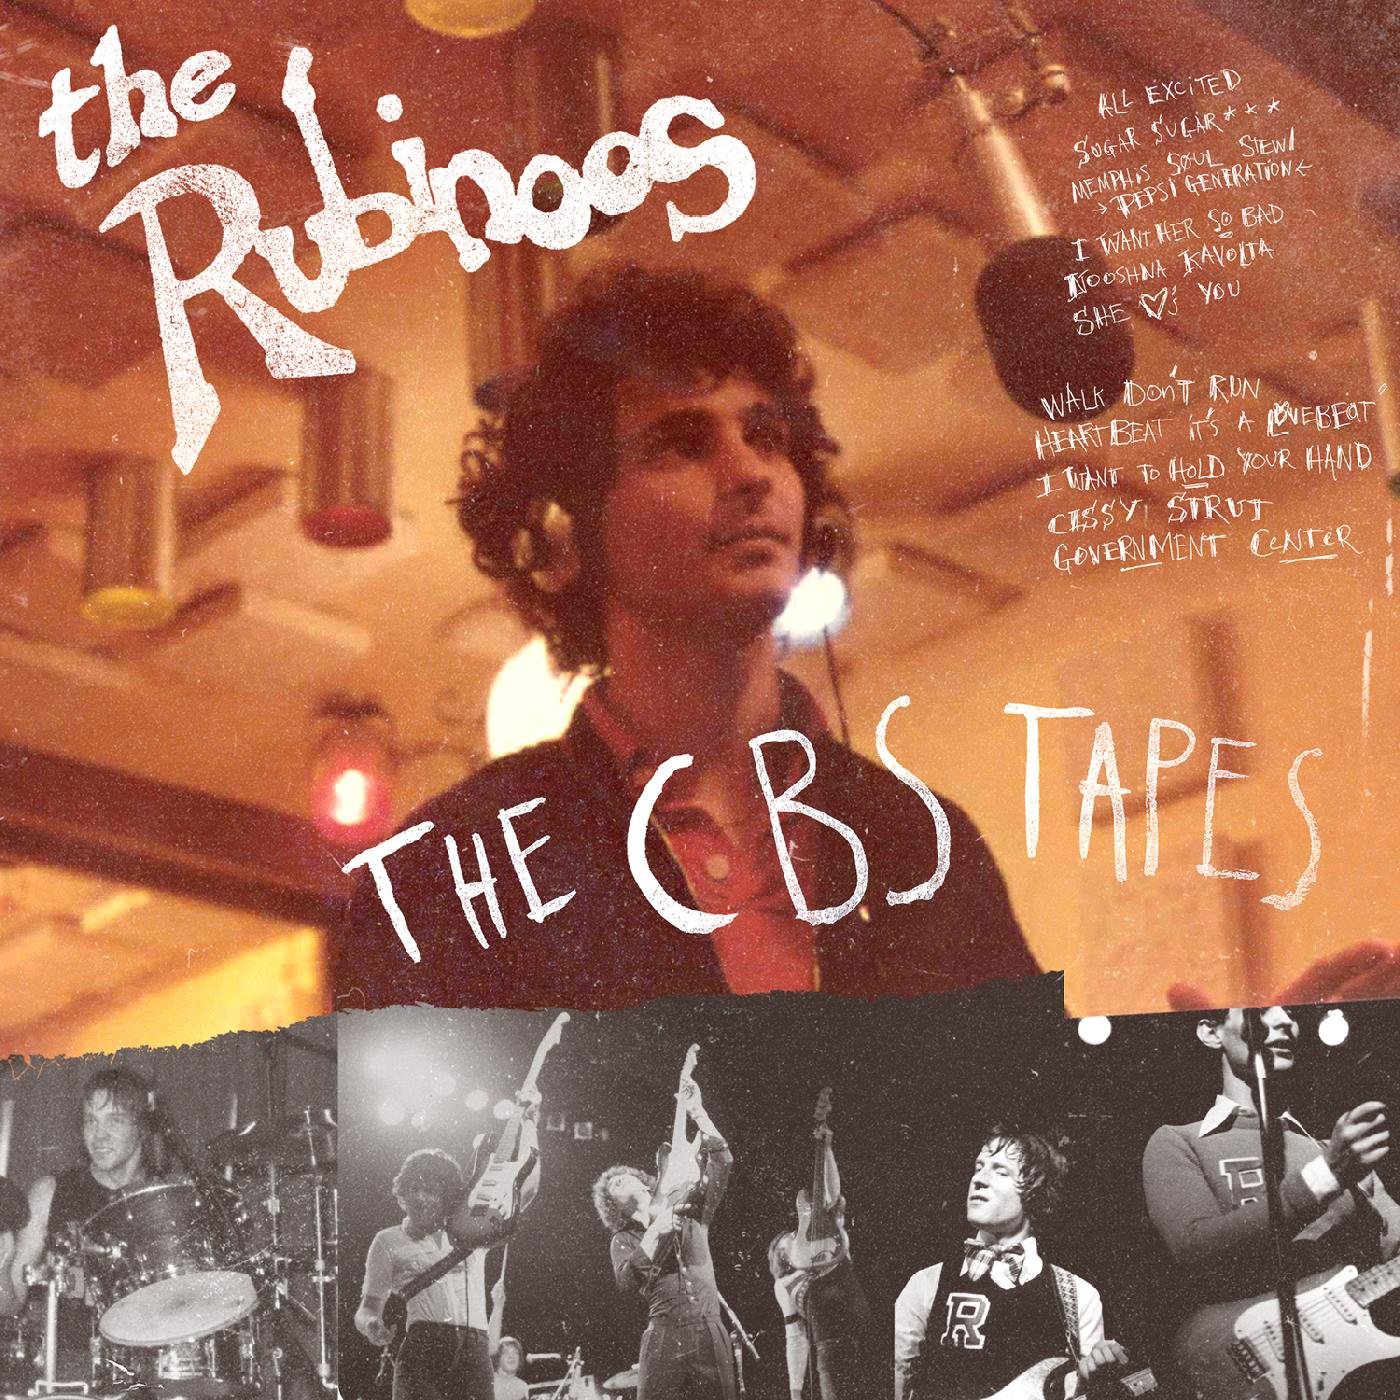 THE RUBINOOS - The CBS Tapes - LP - Red & Black Splatter Vinyl